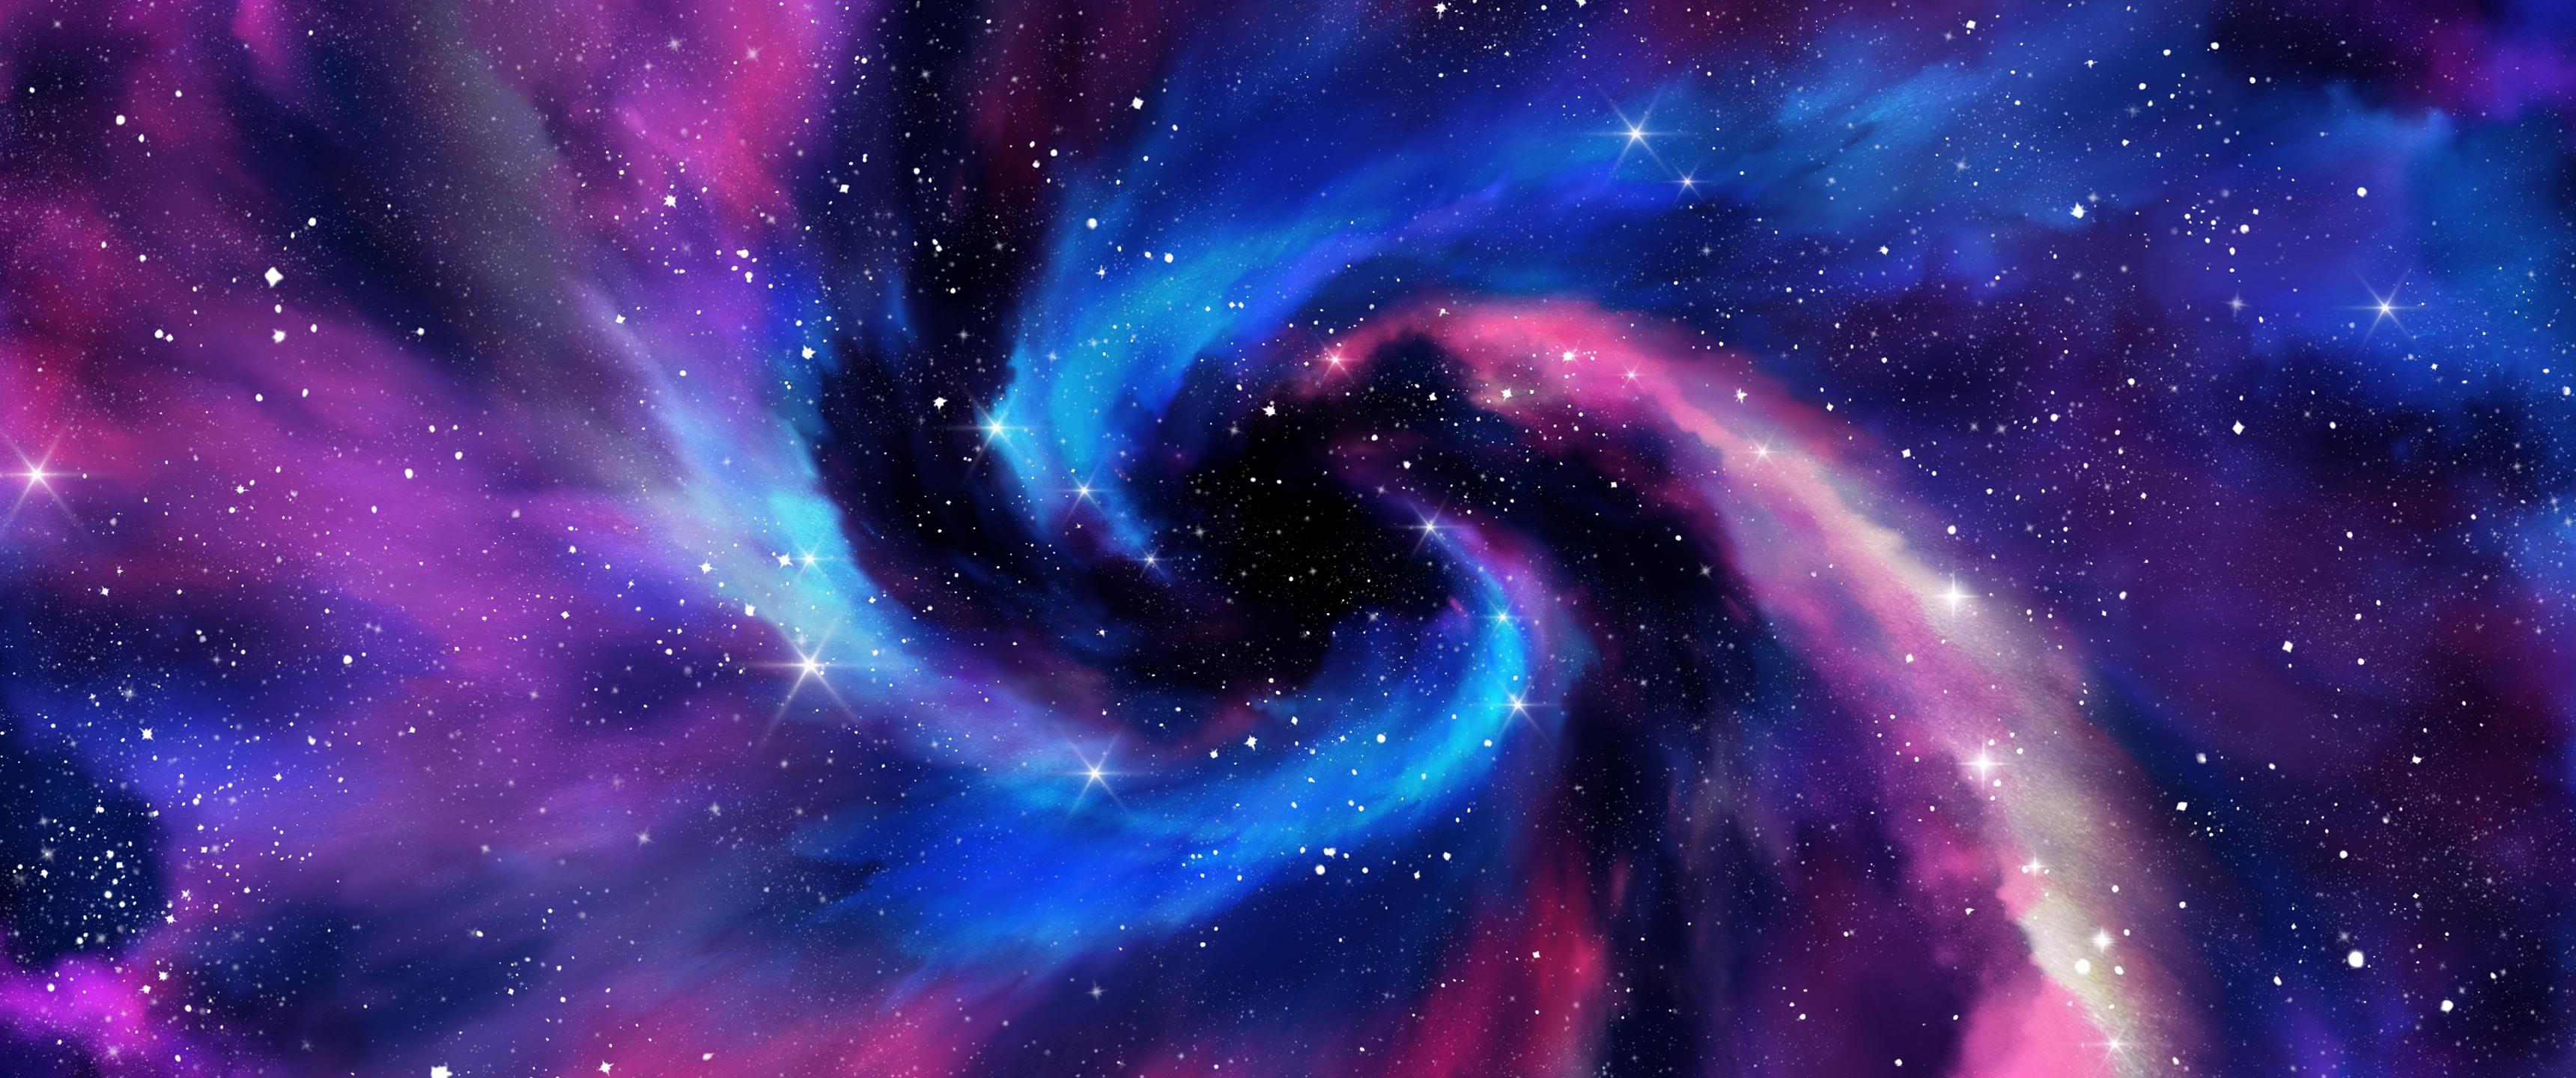 Classic Galaxy Nebula ☆ 1-Hour Space Wallpaper ☆ Longest FREE Stars Motion  Background HD 4K 60fps - YouTube